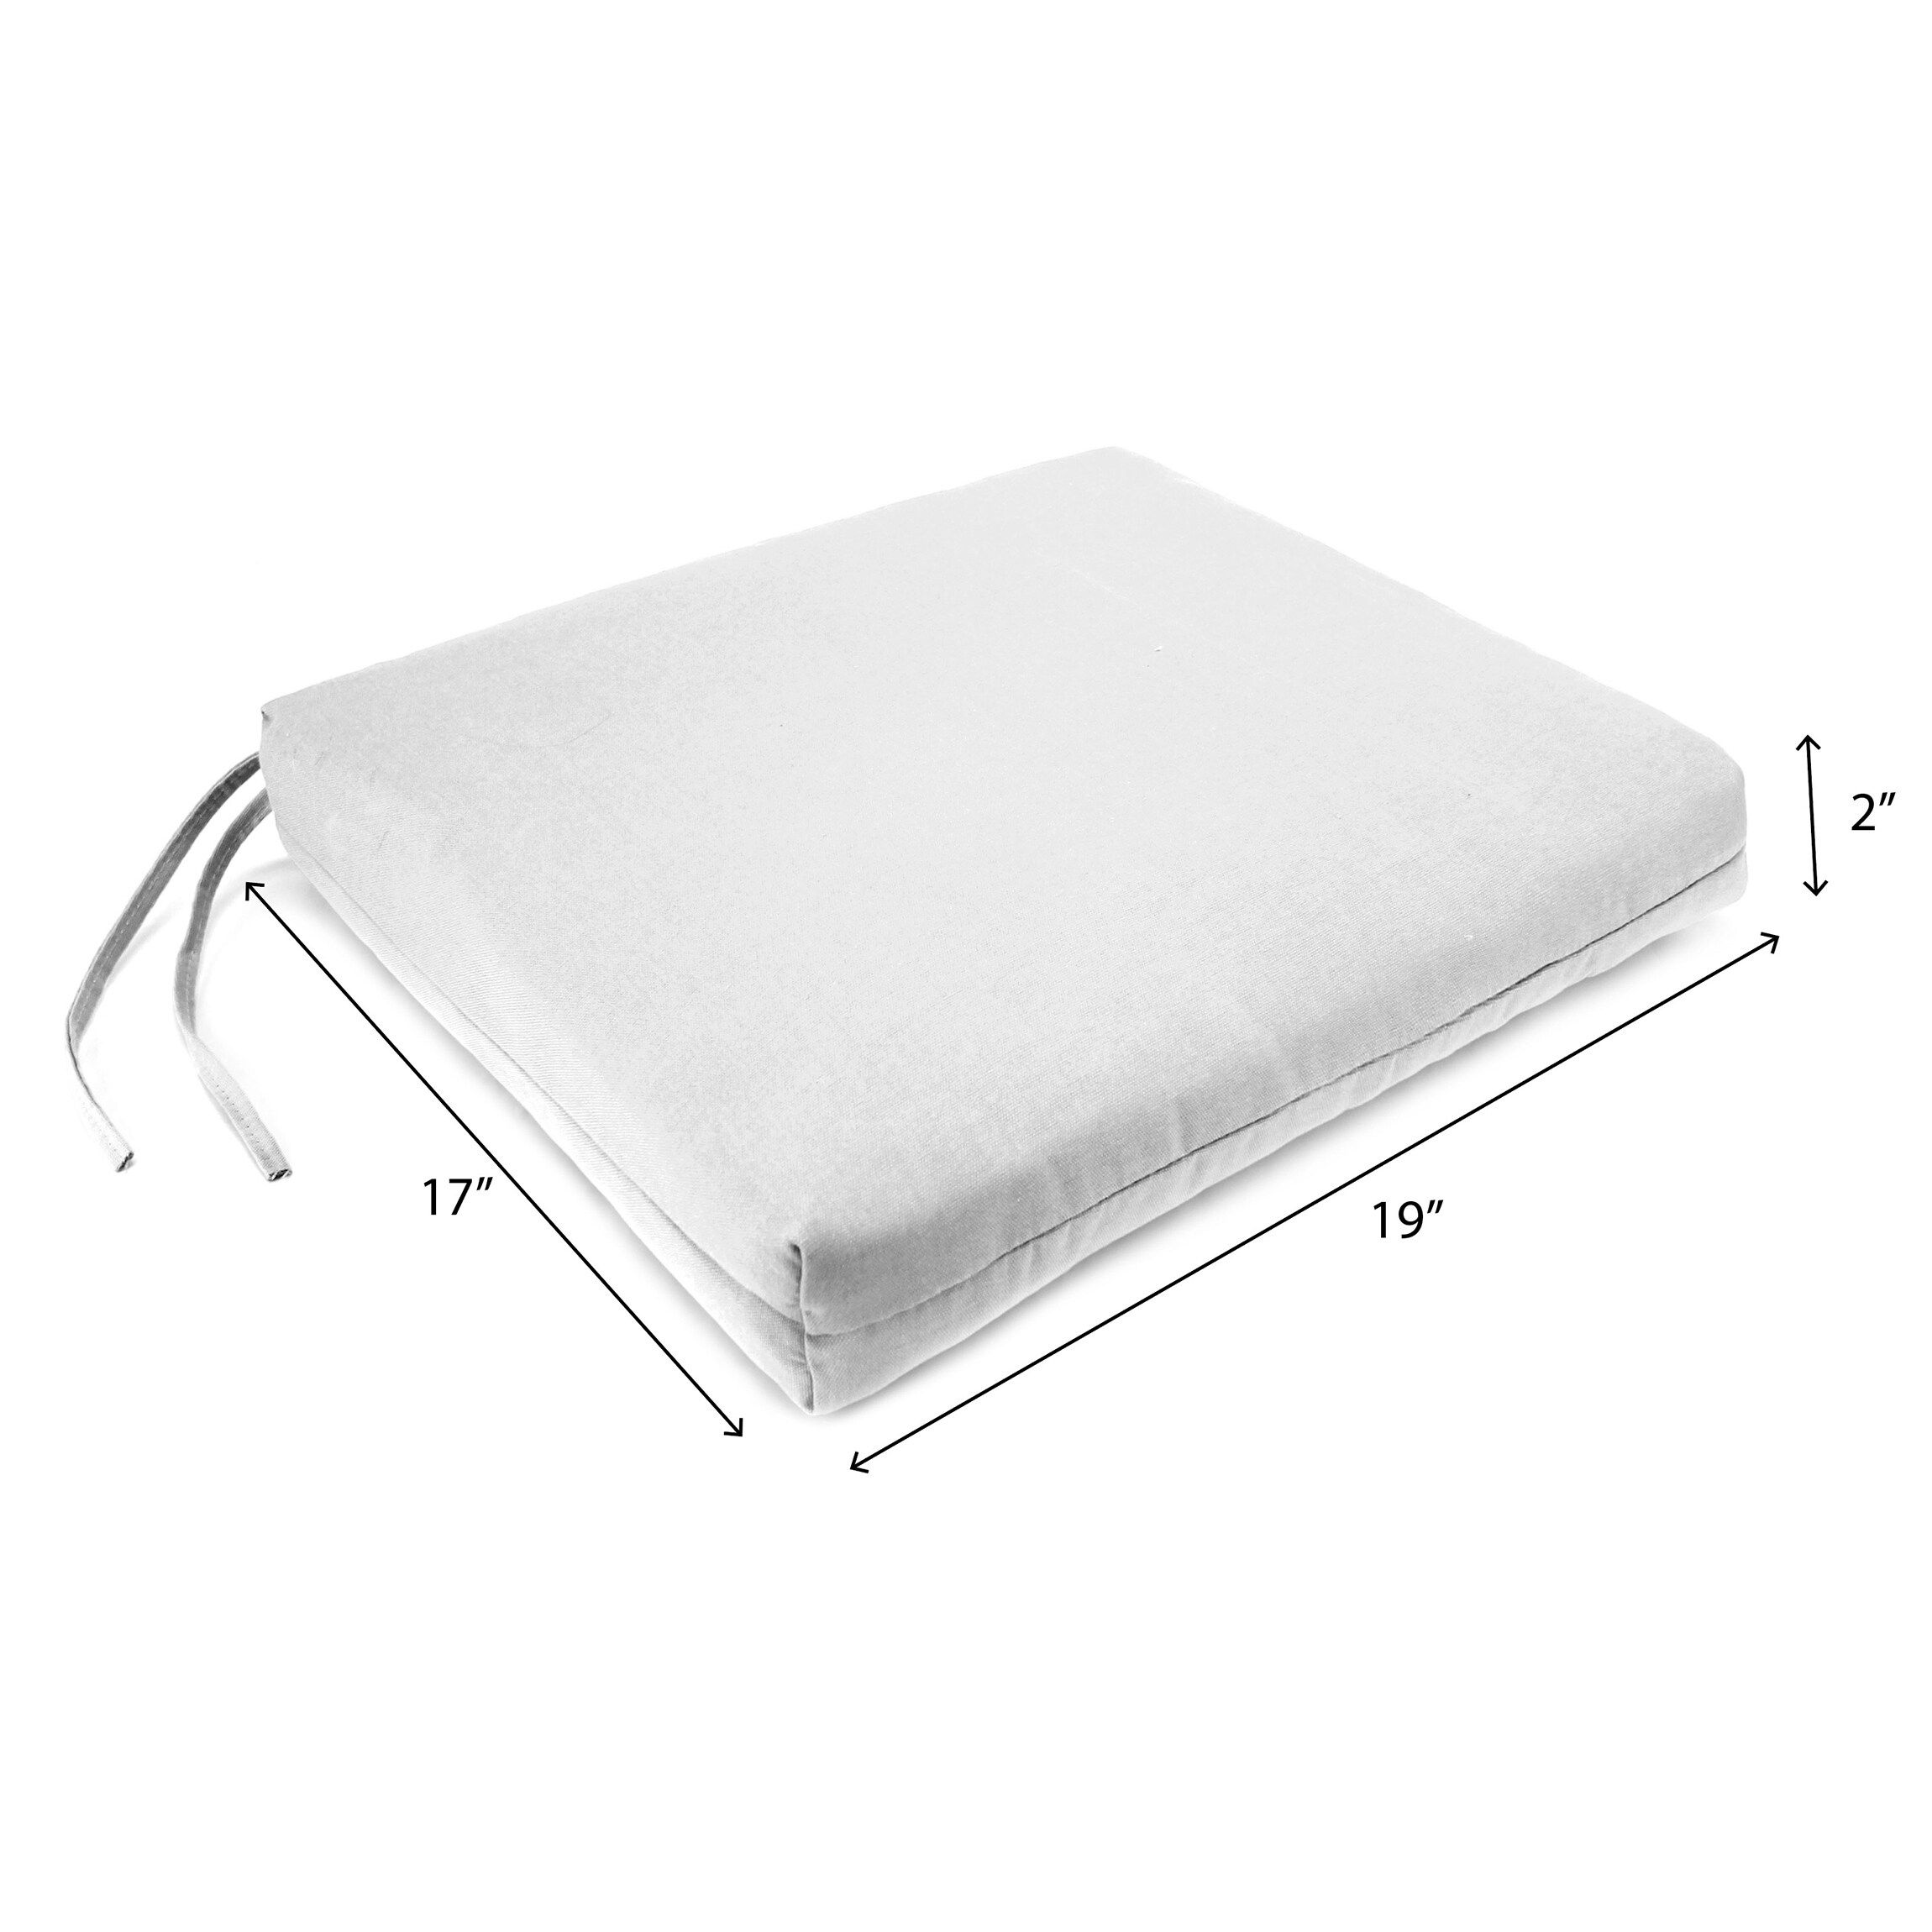 Prox XSA-B2X2W LUMOStage 2 ft x 2 ft White Padded Seat Cushion